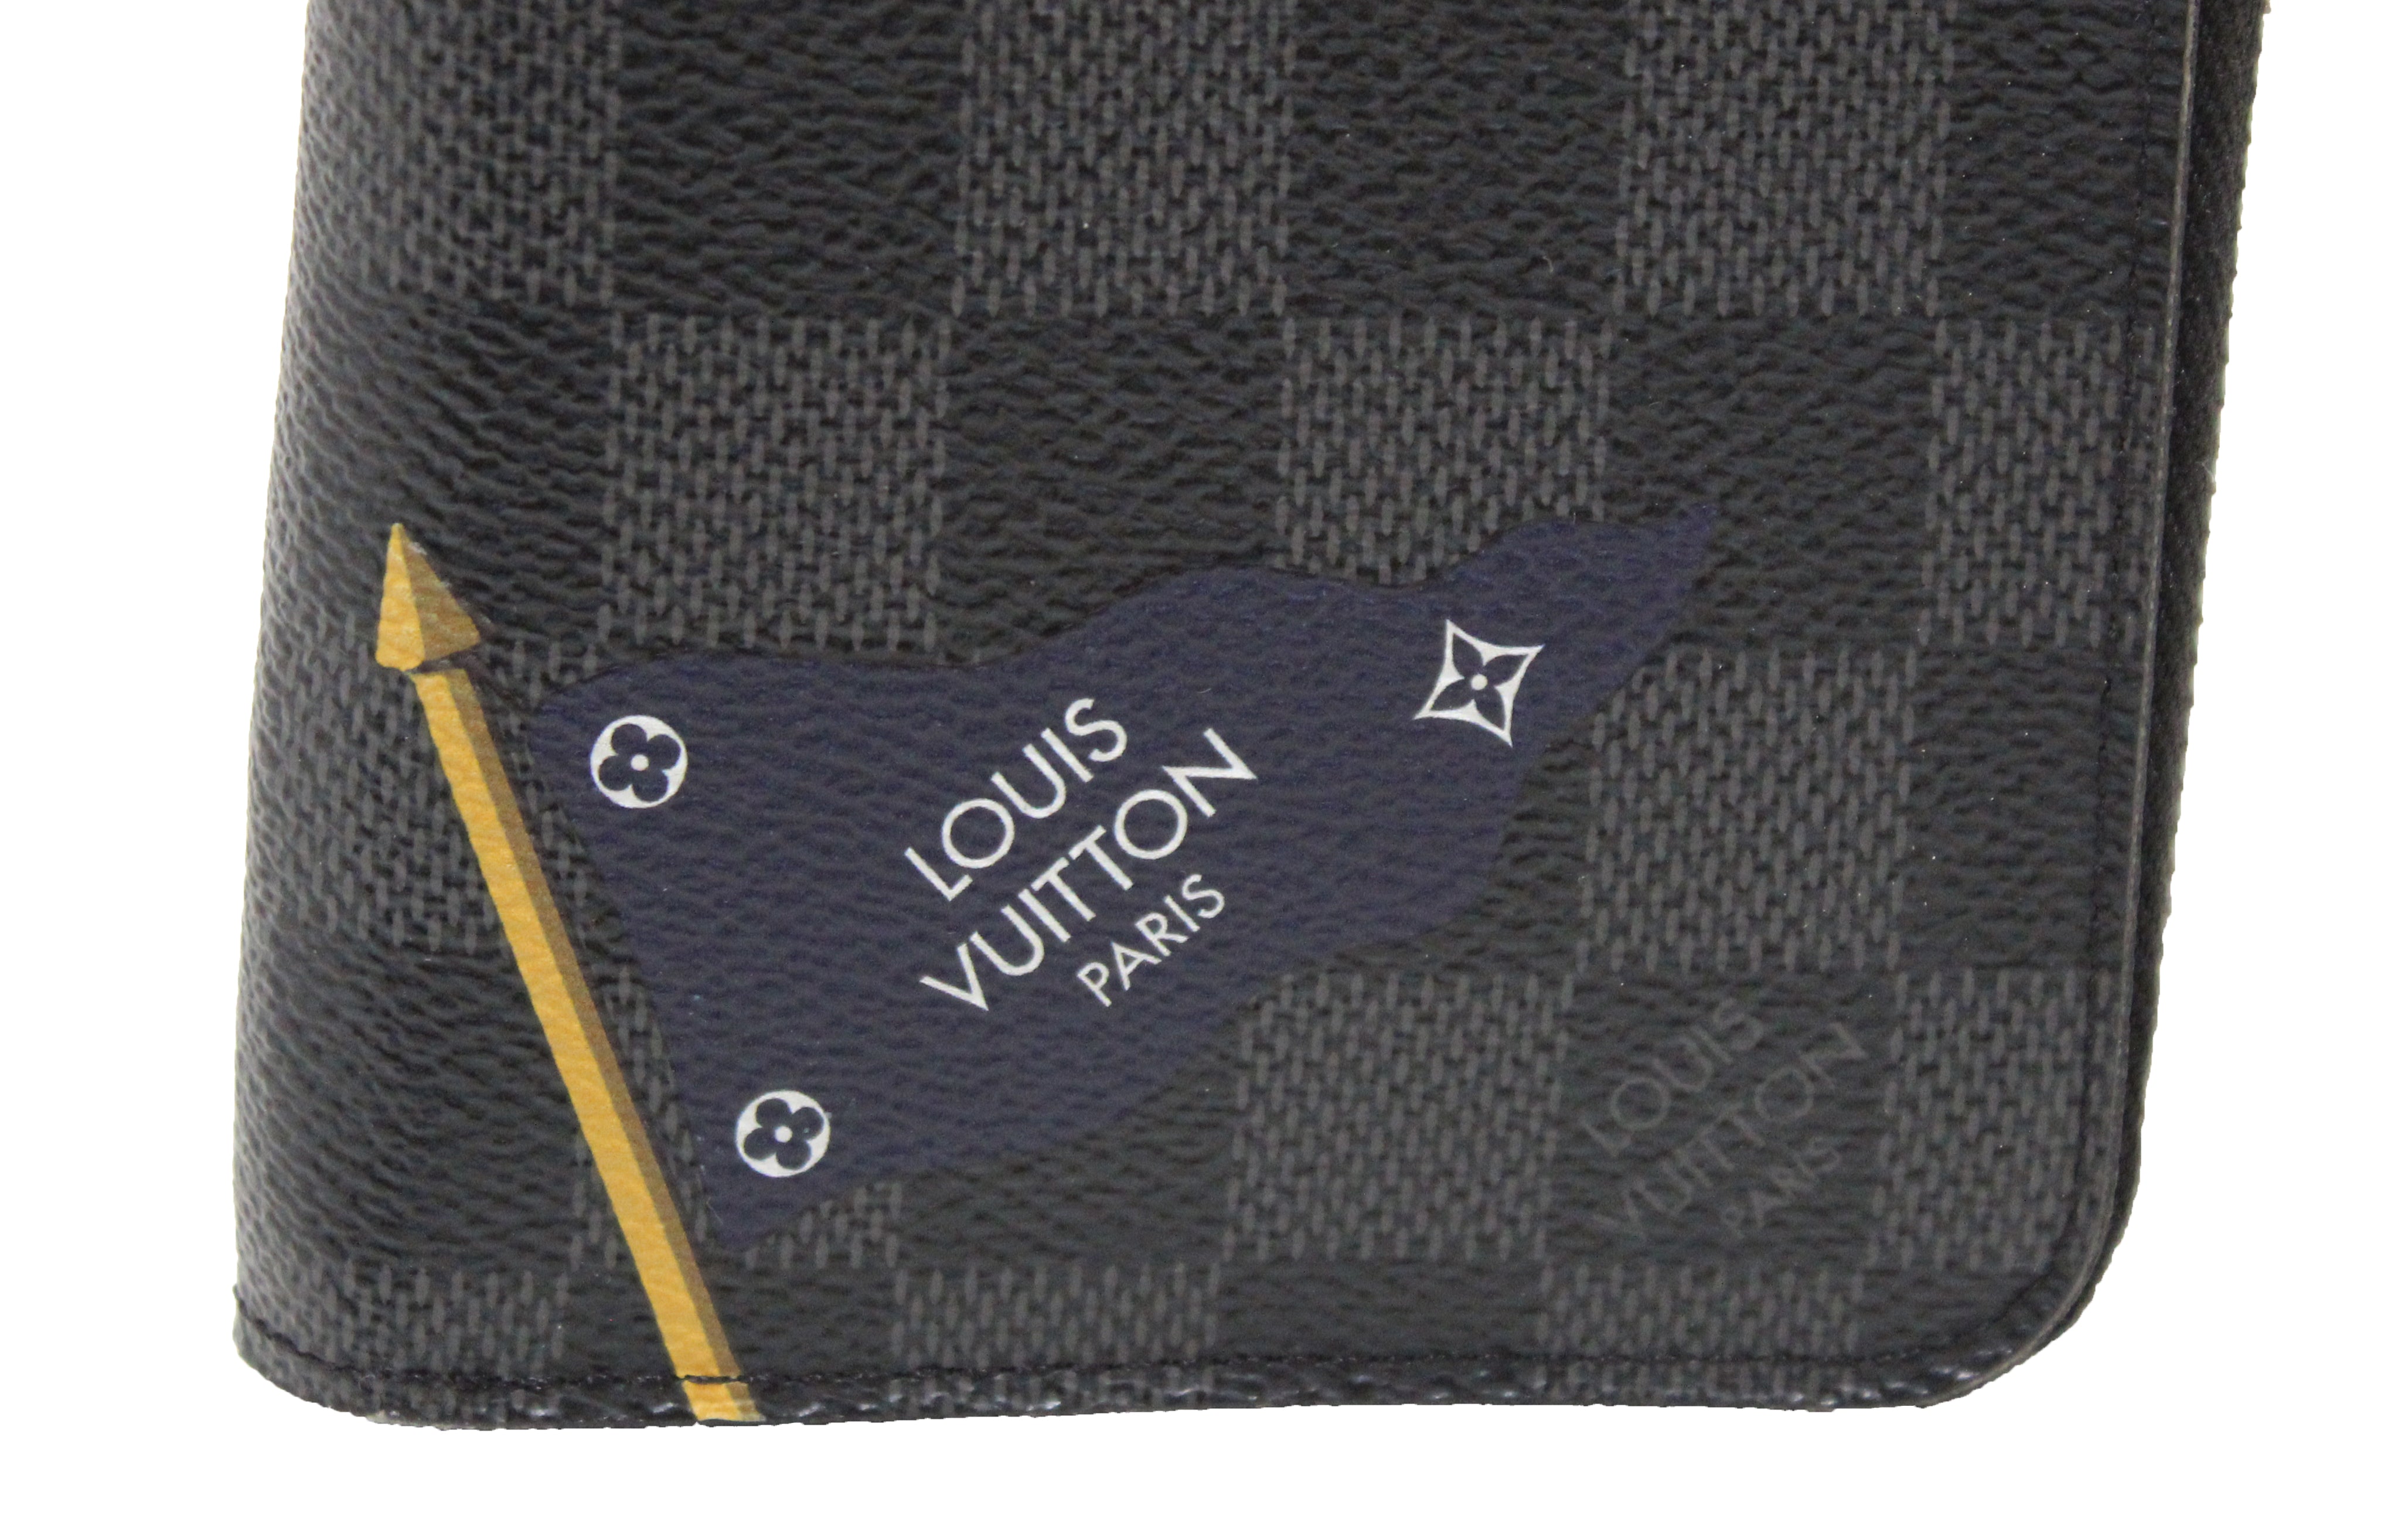 Zippy Vertical Wallet Monogram Other - Men - Small Leather Goods